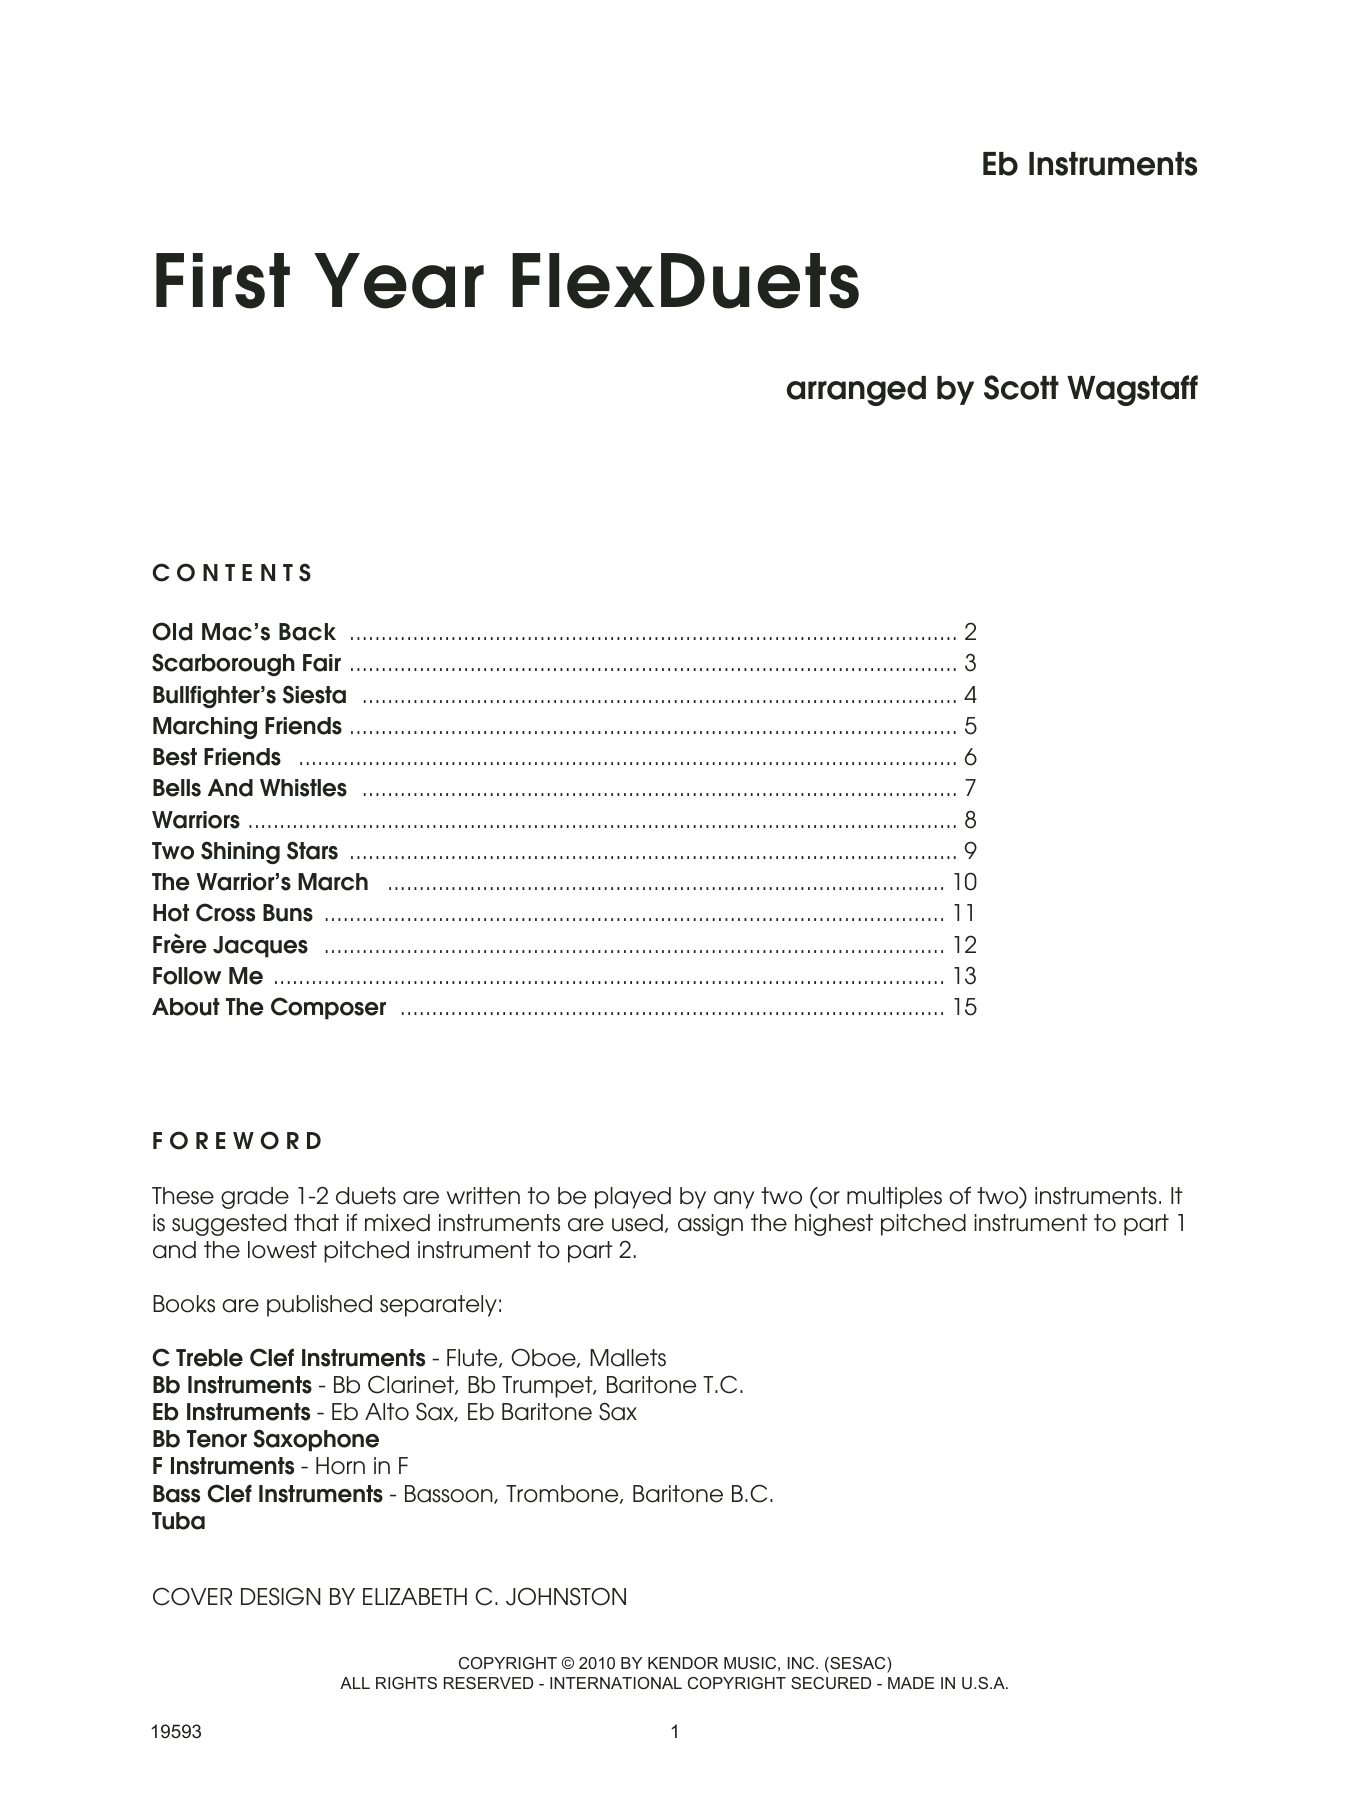 Download Scott Wagstaff First Year FLexDuets - Eb Instruments Sheet Music